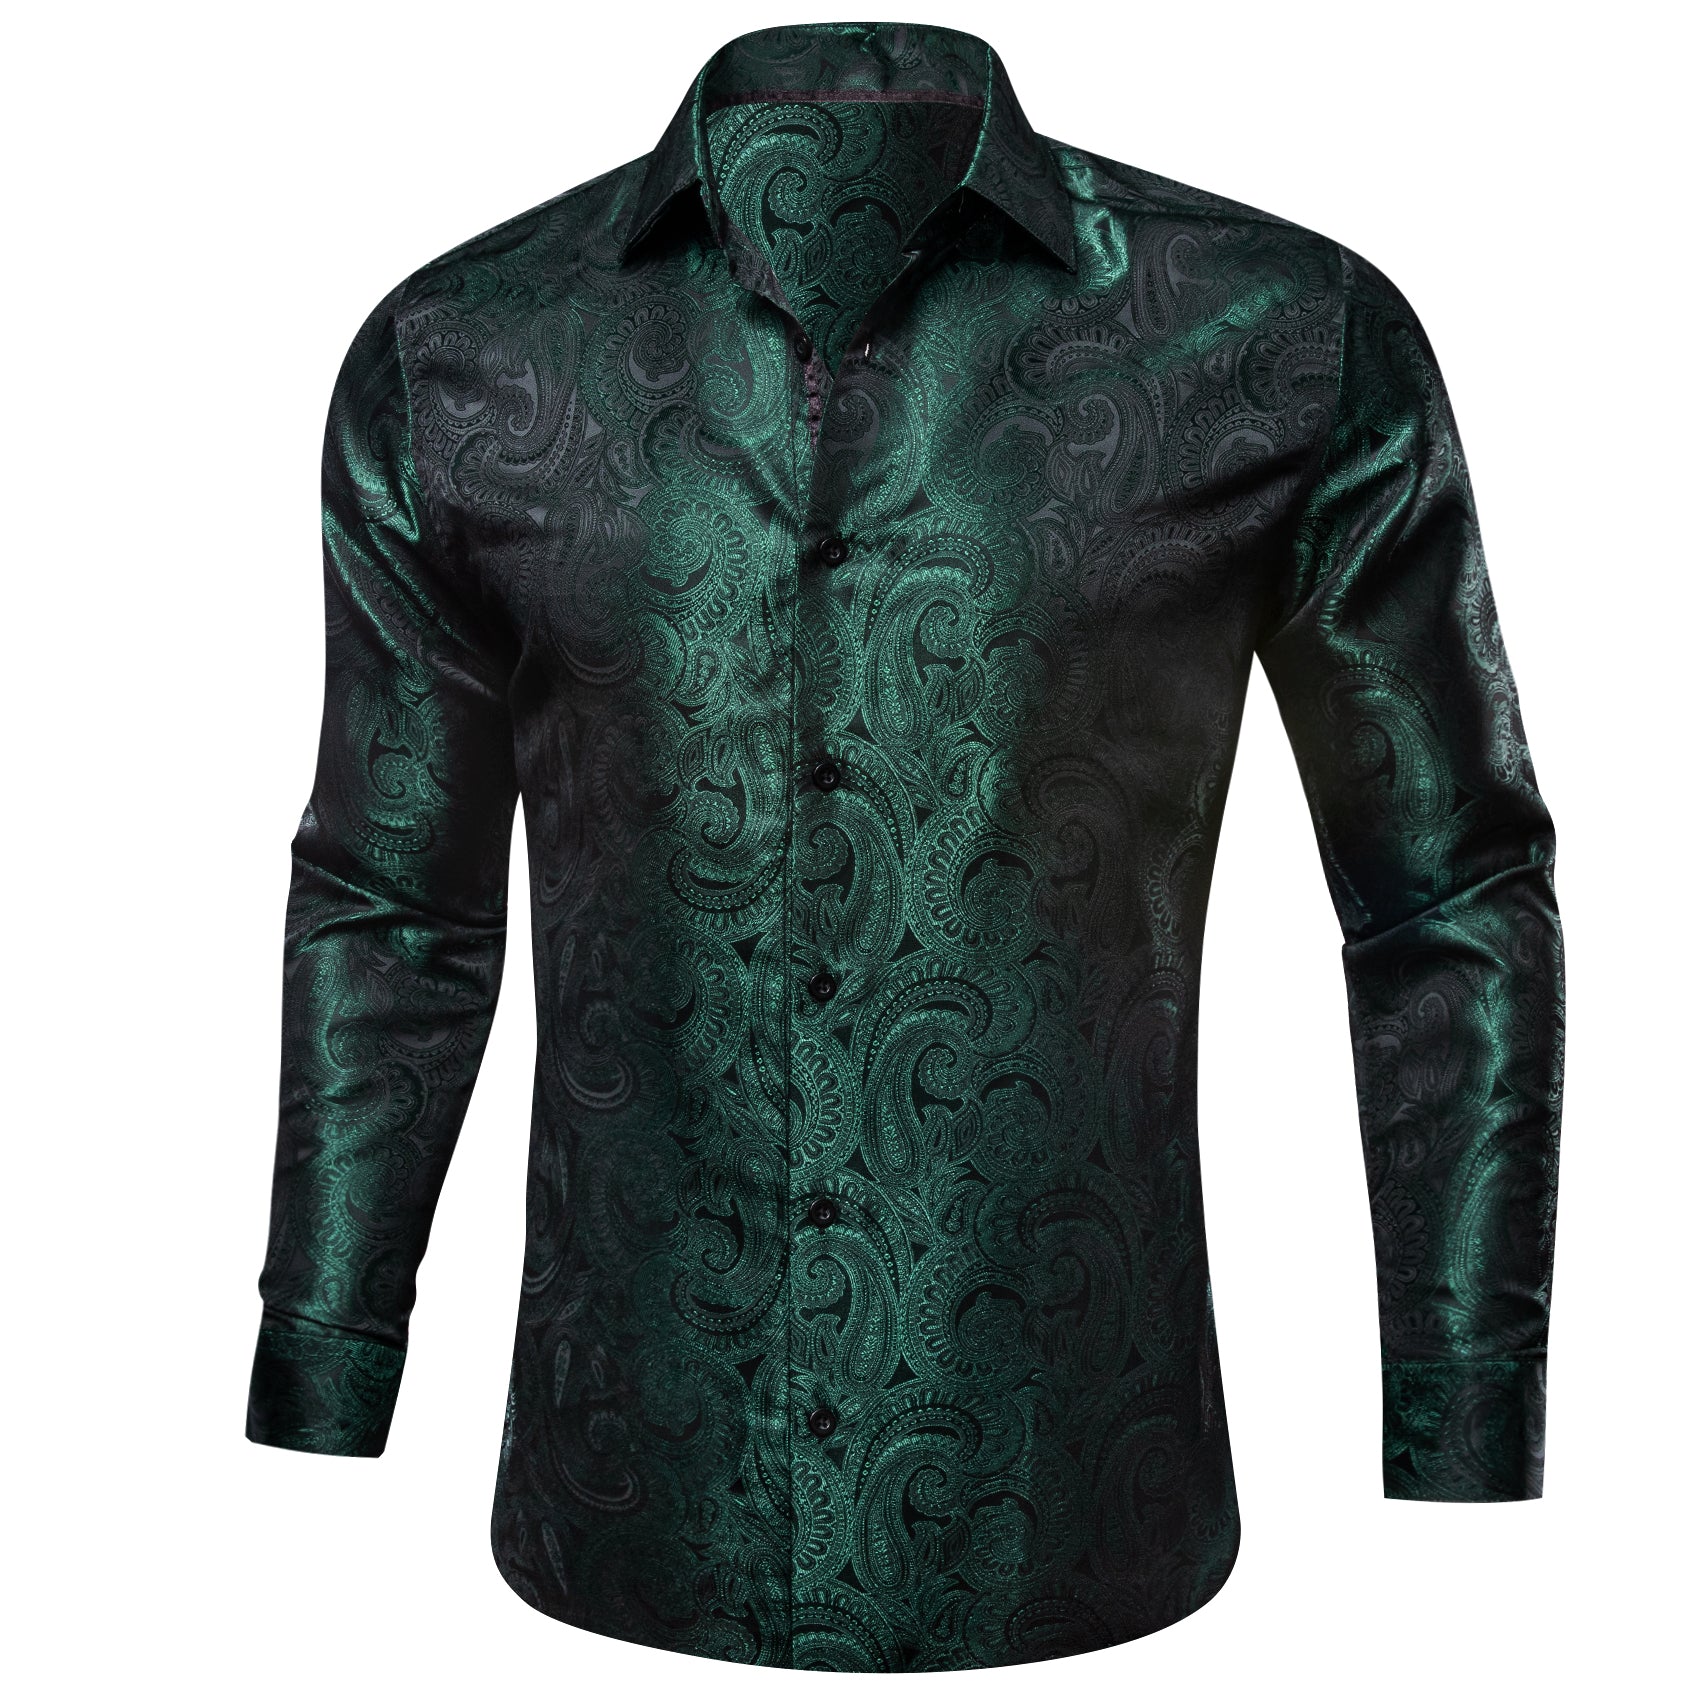 Barry.wang Blackish Green Paisley Silk Men's Shirt